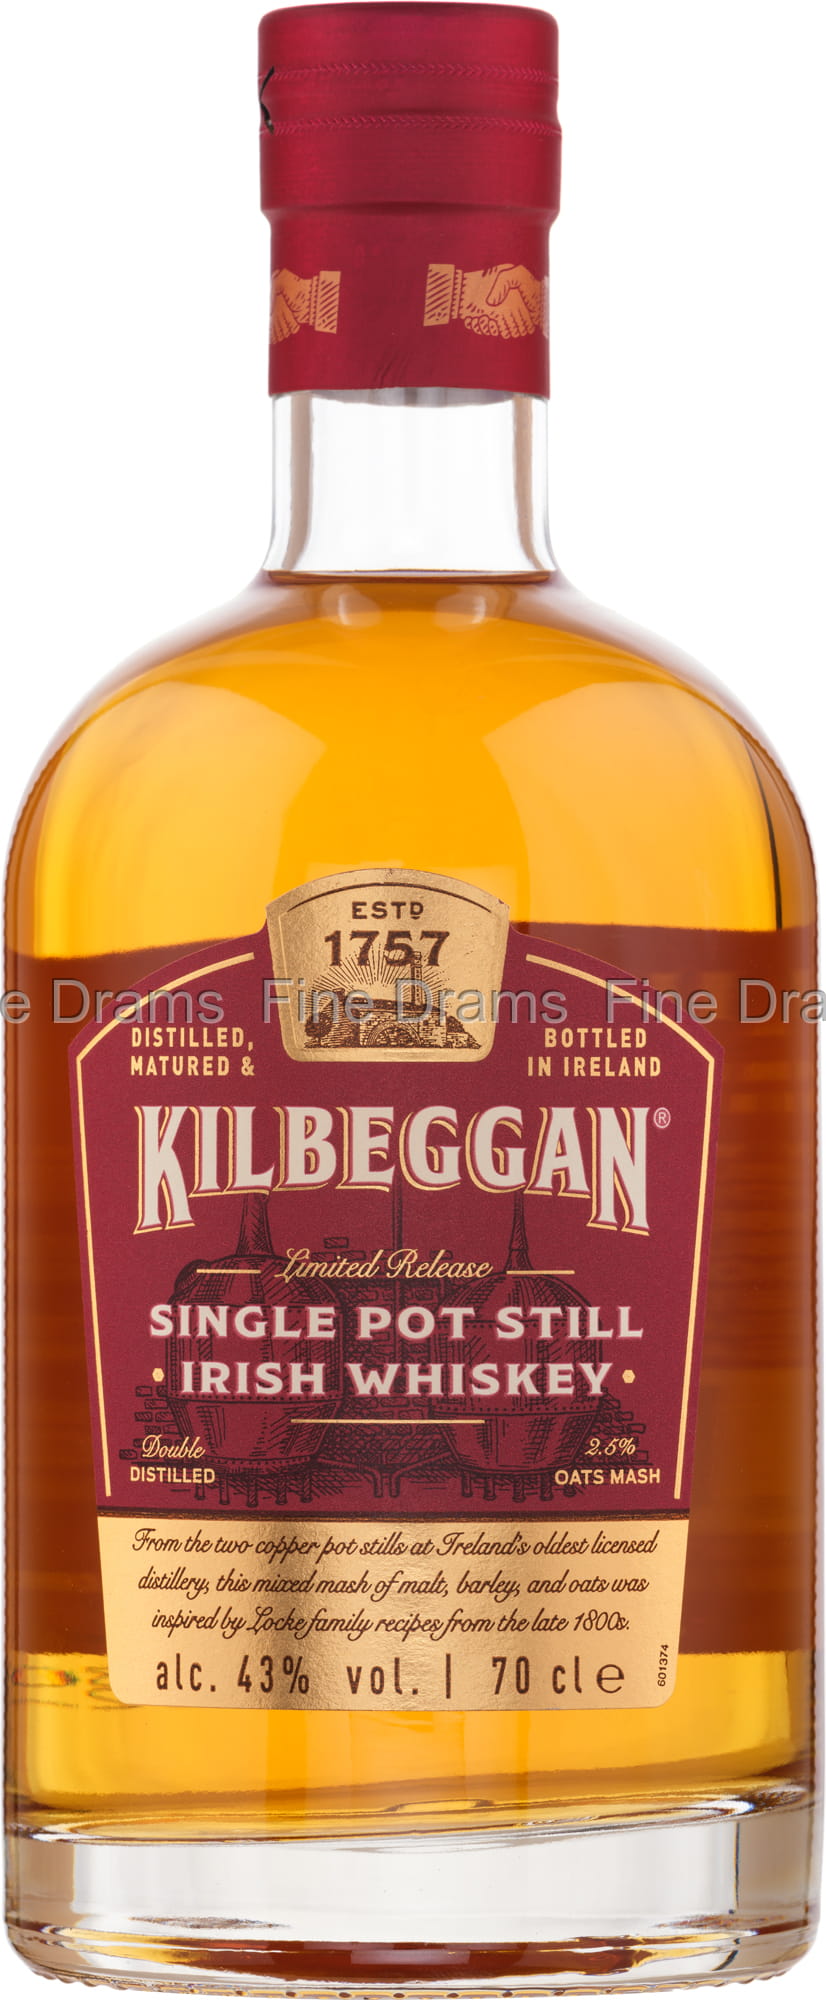 https://images.finedrams.com/image/60847-large-1633459629/kilbeggan-single-pot-still-whiskey.jpg